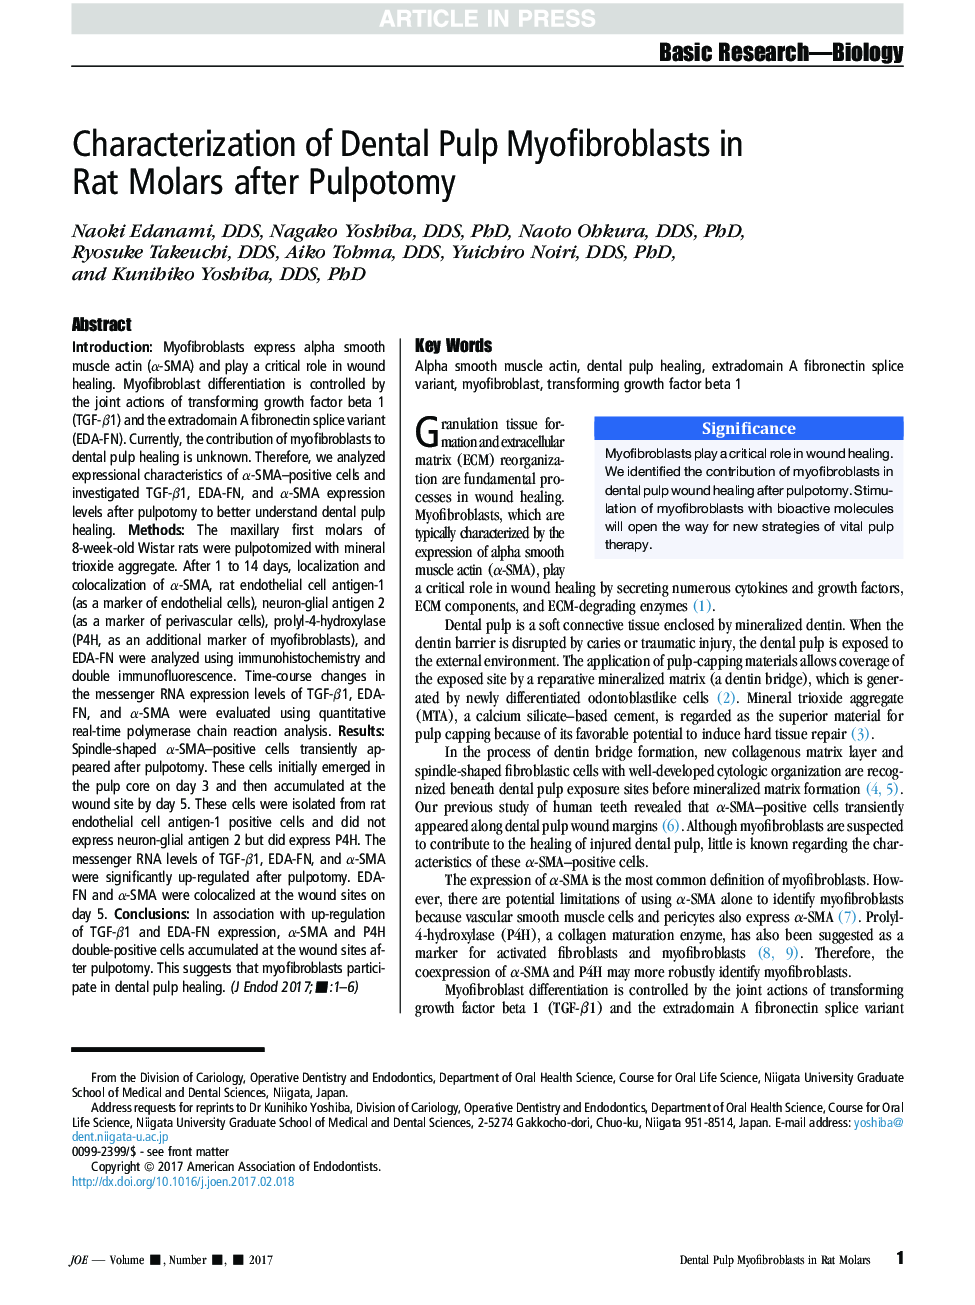 Characterization of Dental Pulp Myofibroblasts in Rat Molars after Pulpotomy